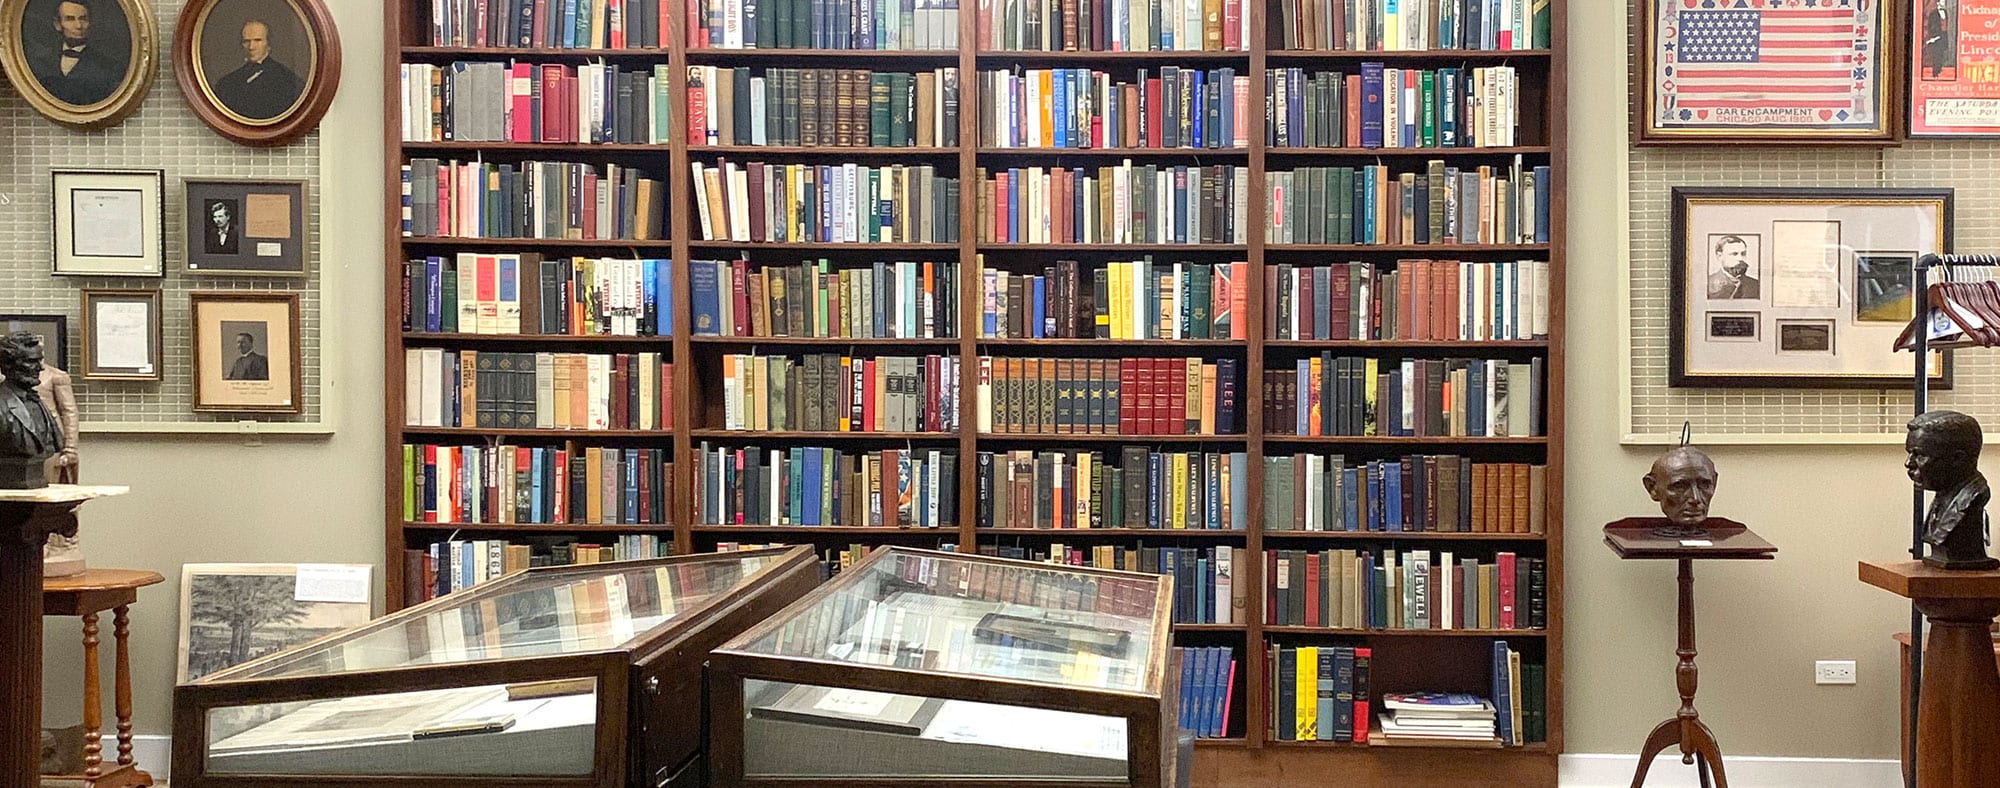 Abraham Lincoln Book Shop, Inc. - Chicago, IL, US, biography